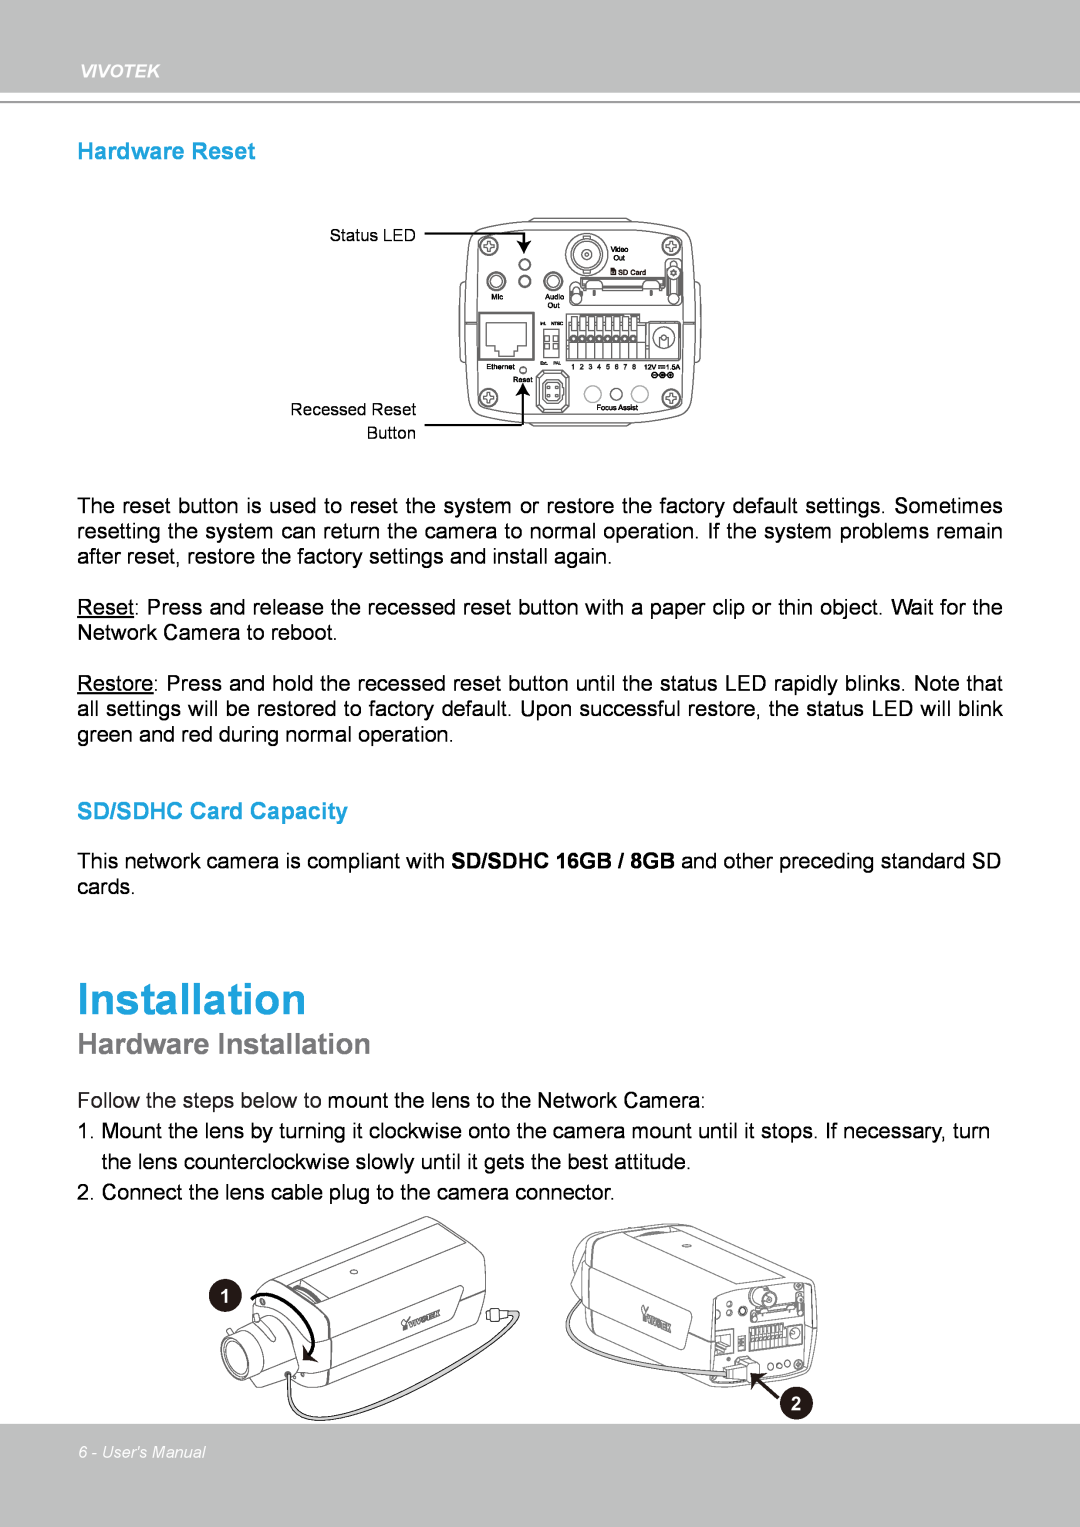 Vivotek IP8151 manual Hardware Installation, Hardware Reset, SD/SDHC Card Capacity 